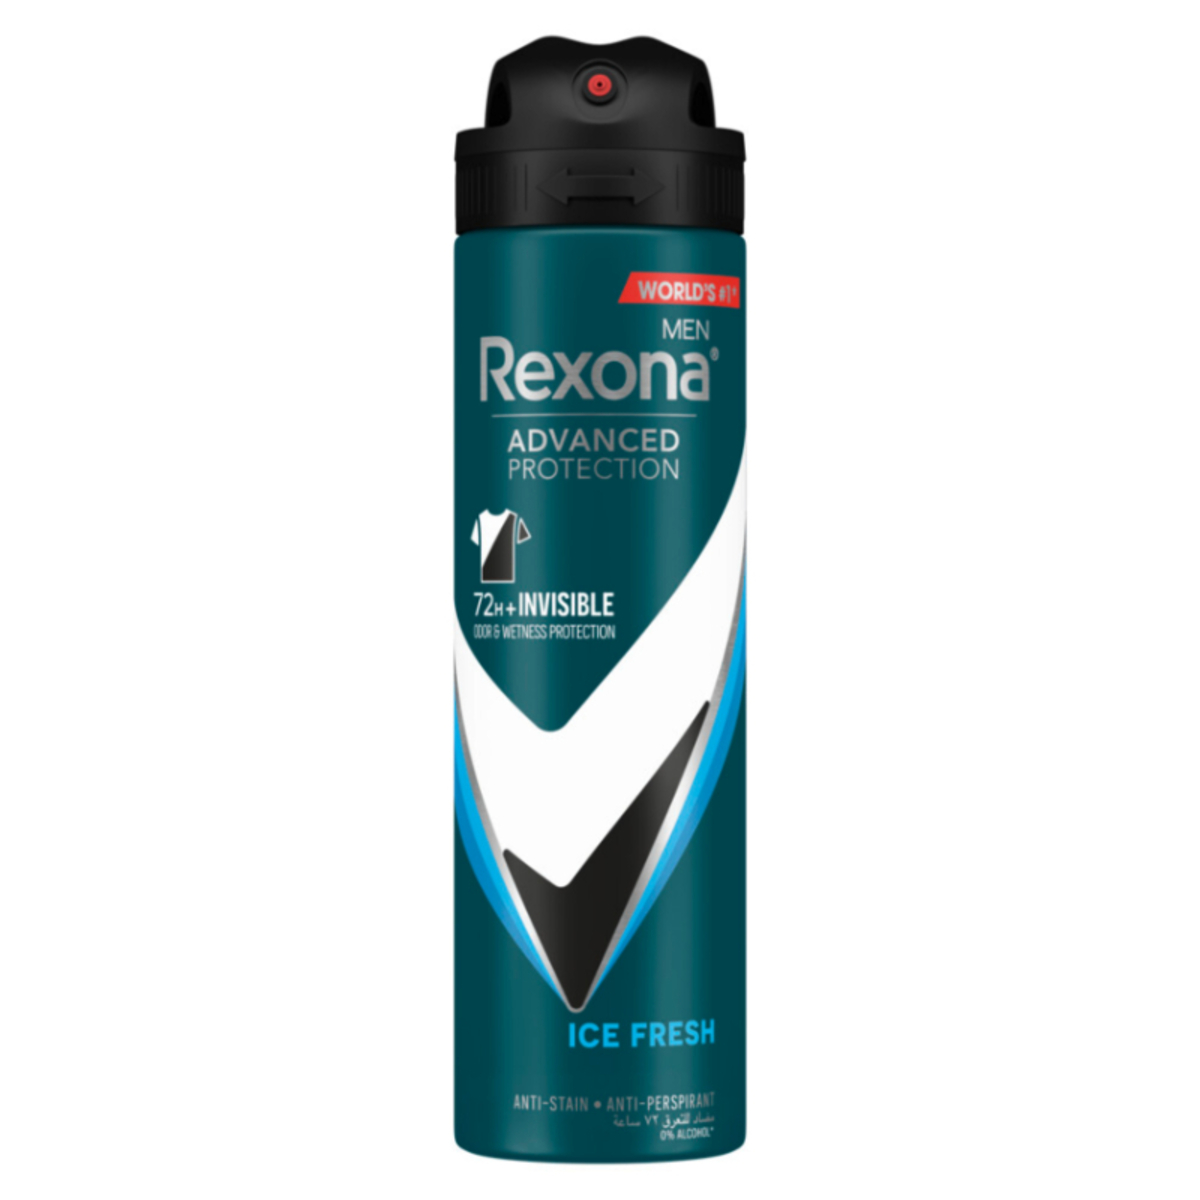 Rexona Men Advanced Protection Deodorant Spray 72 hour Invisible Ice Fresh 2 x 150 ml